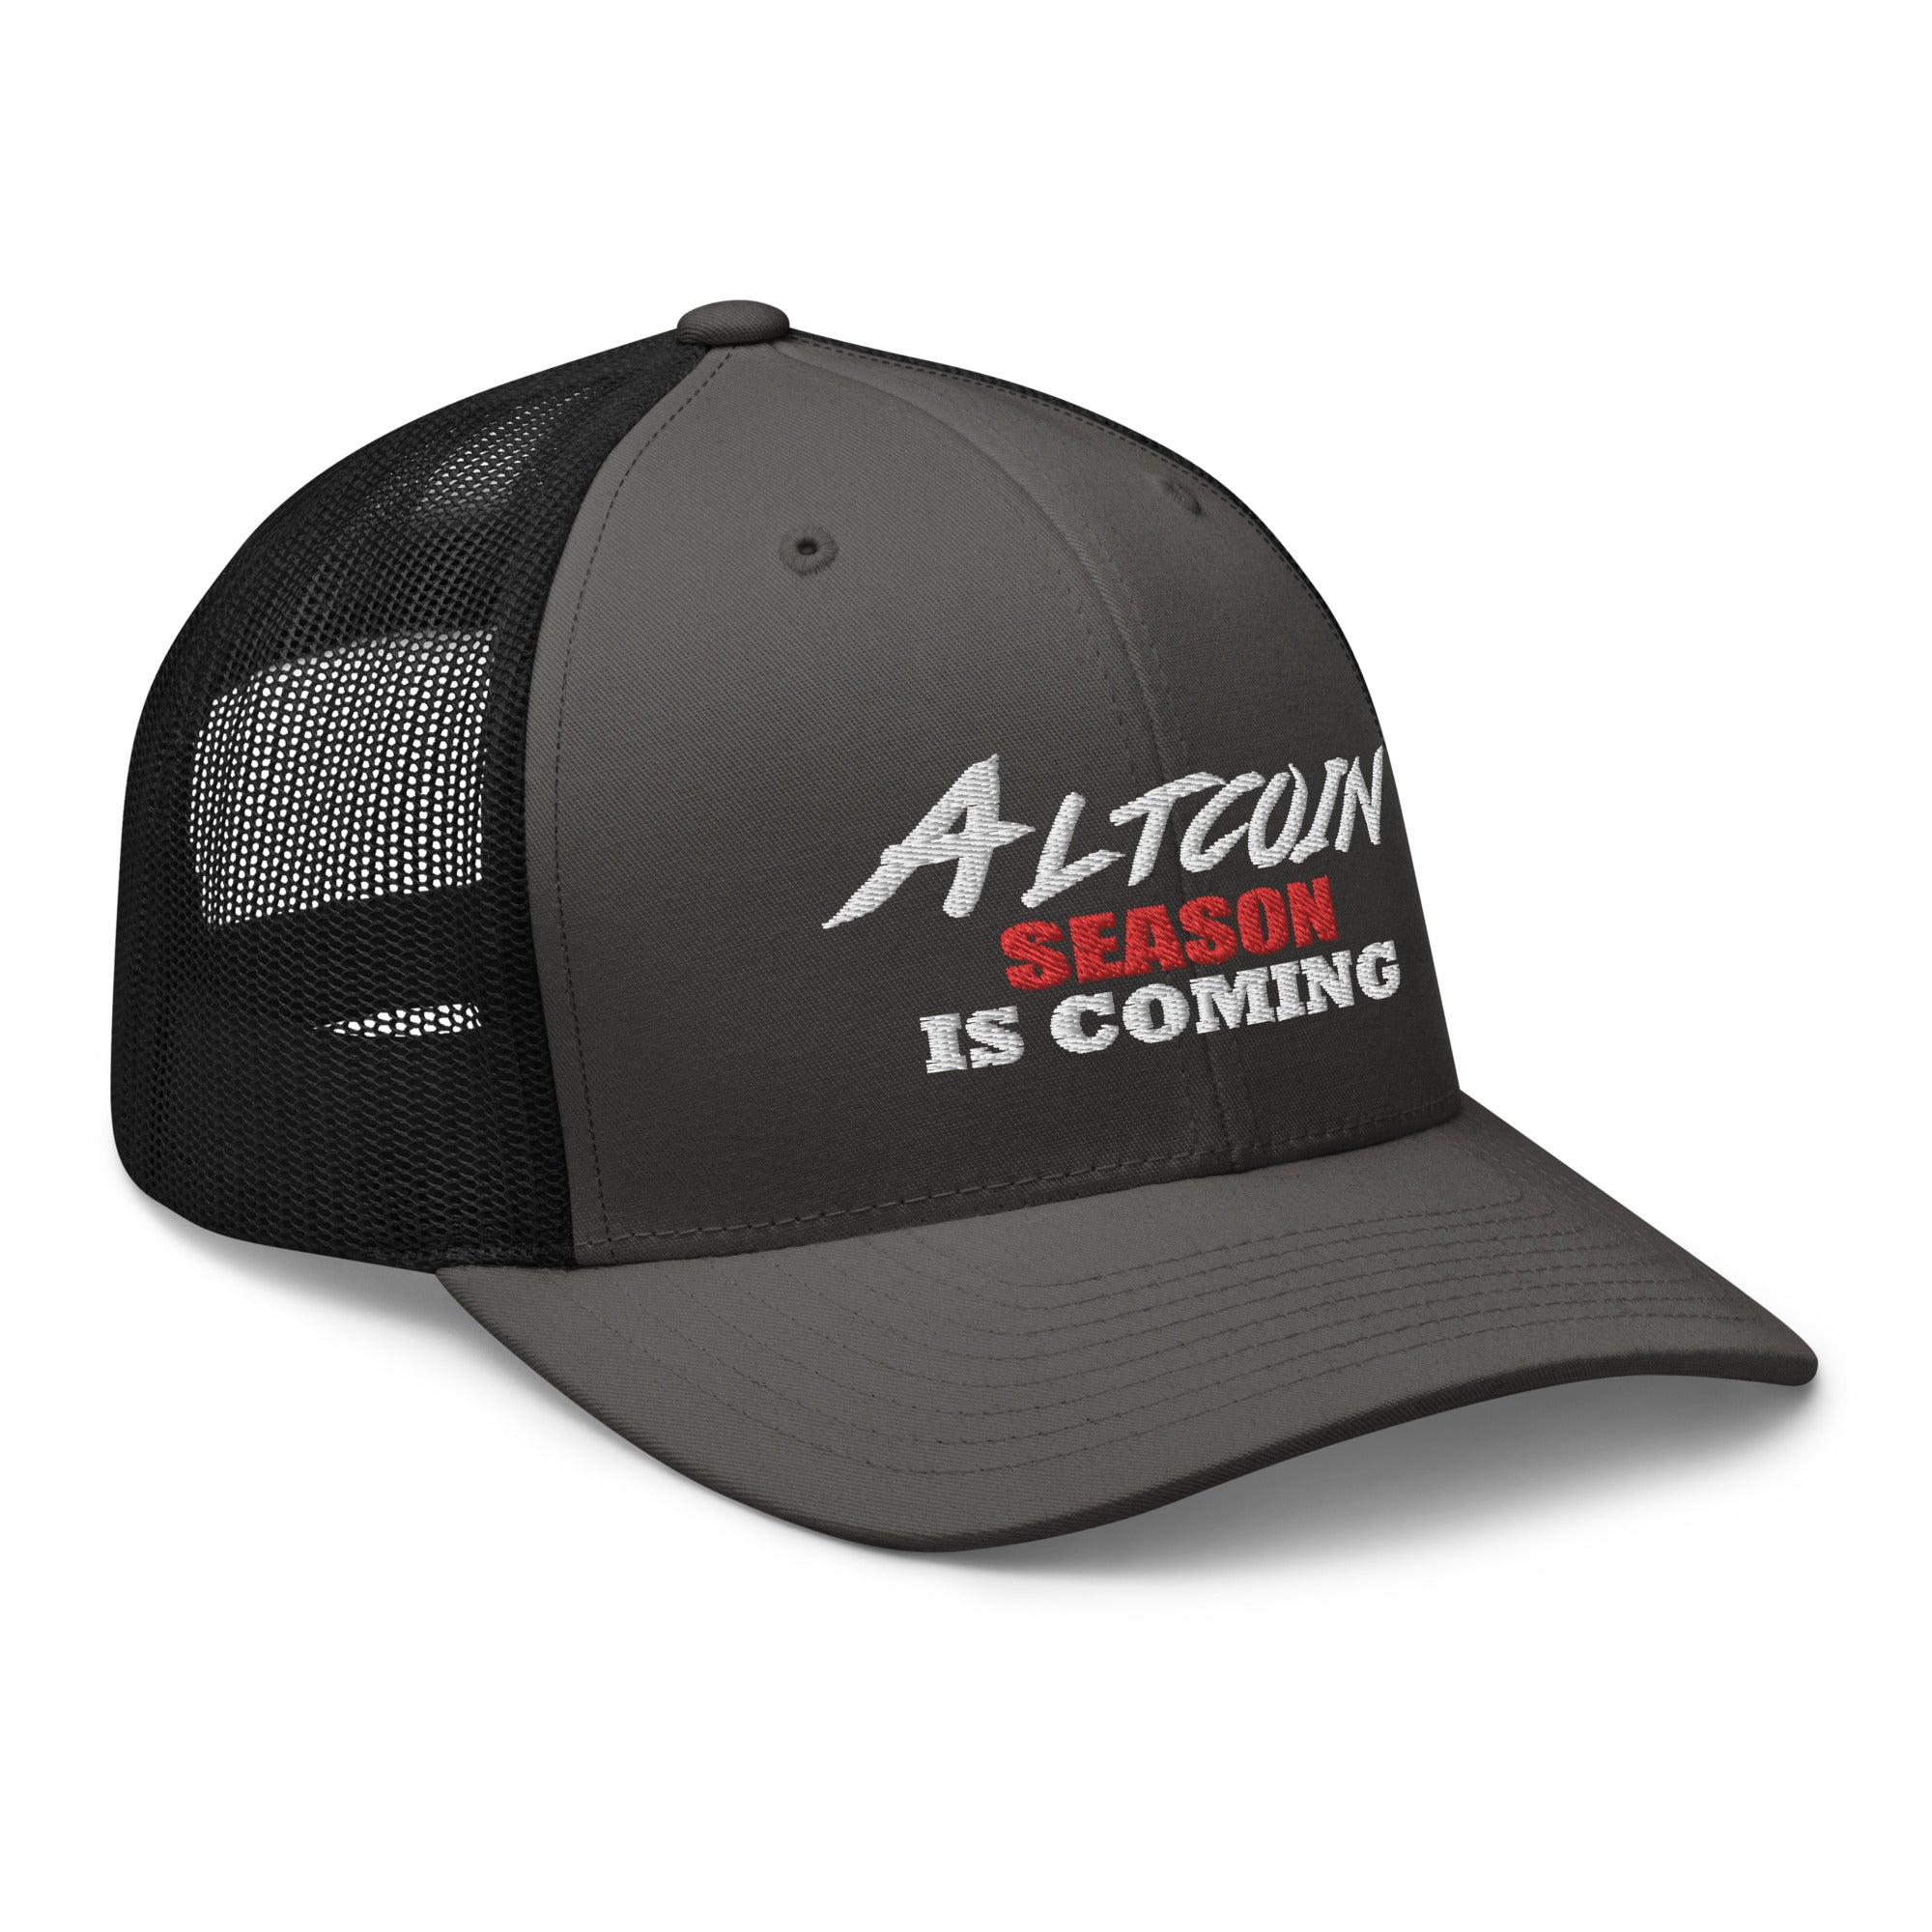 Altcoin Season Is Coming Crypto Bull Run Trucker Cap Snapback Hat